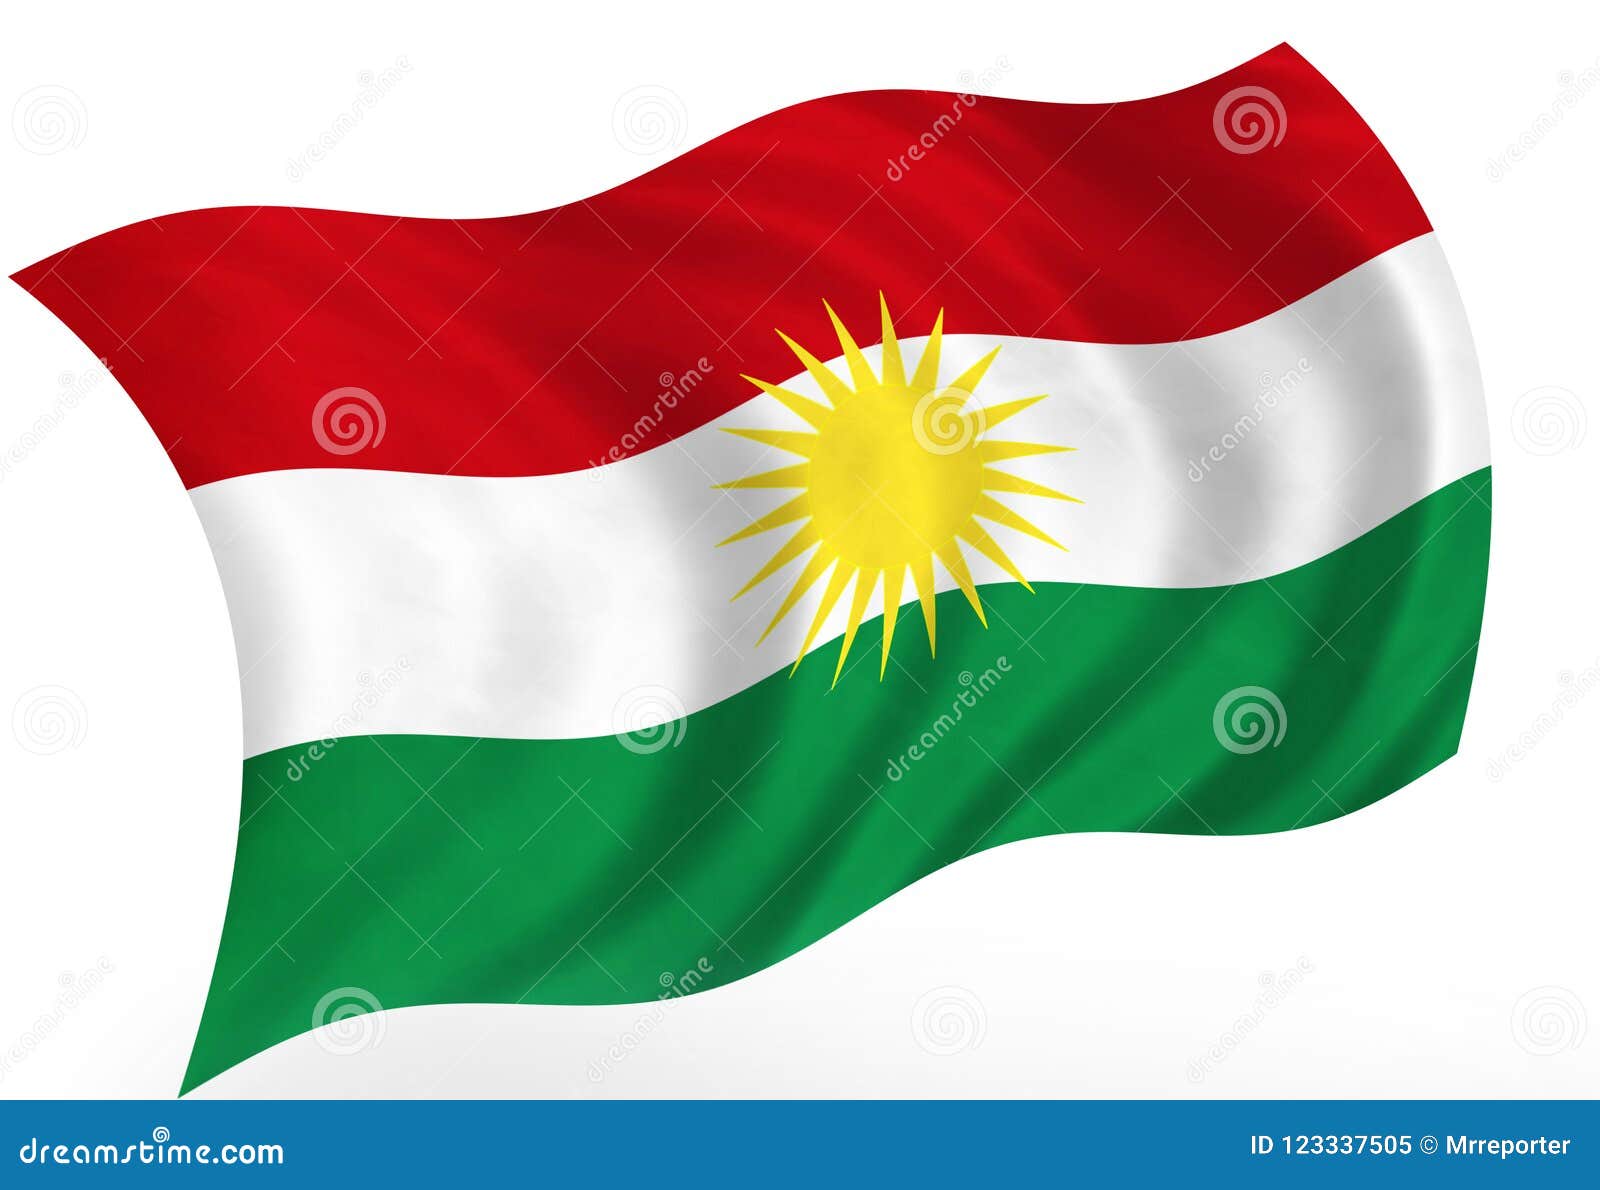 Wavy Kurdistan Flag Logo Stock Photography | CartoonDealer.com #115227164